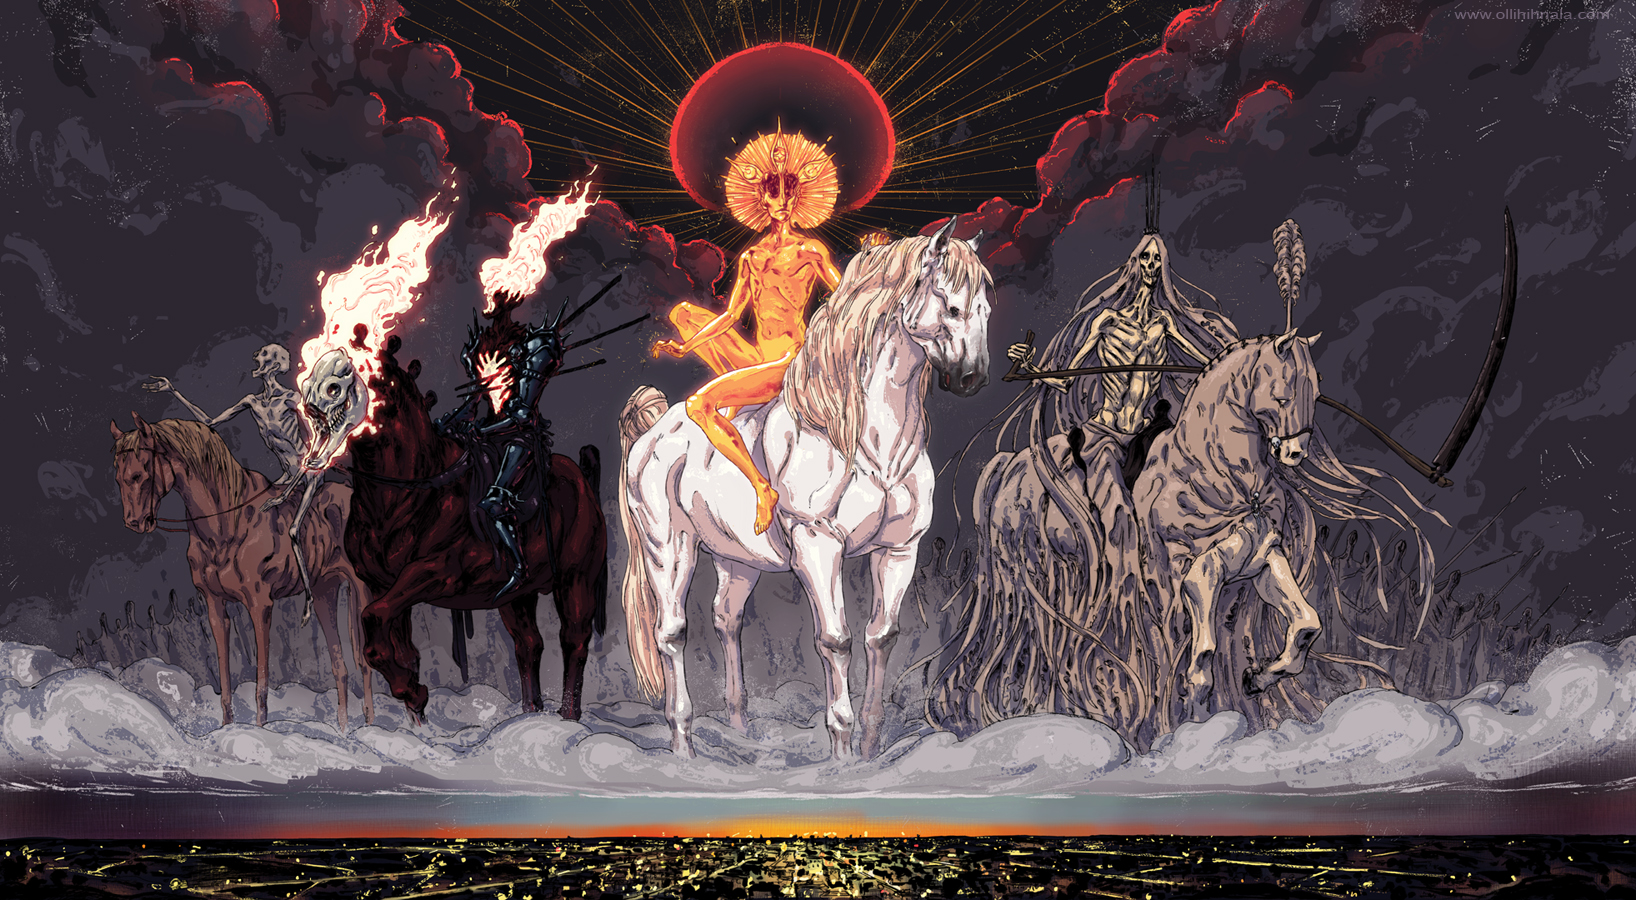 the Four Horsemen of the Apocalypse by korintic on DeviantArt